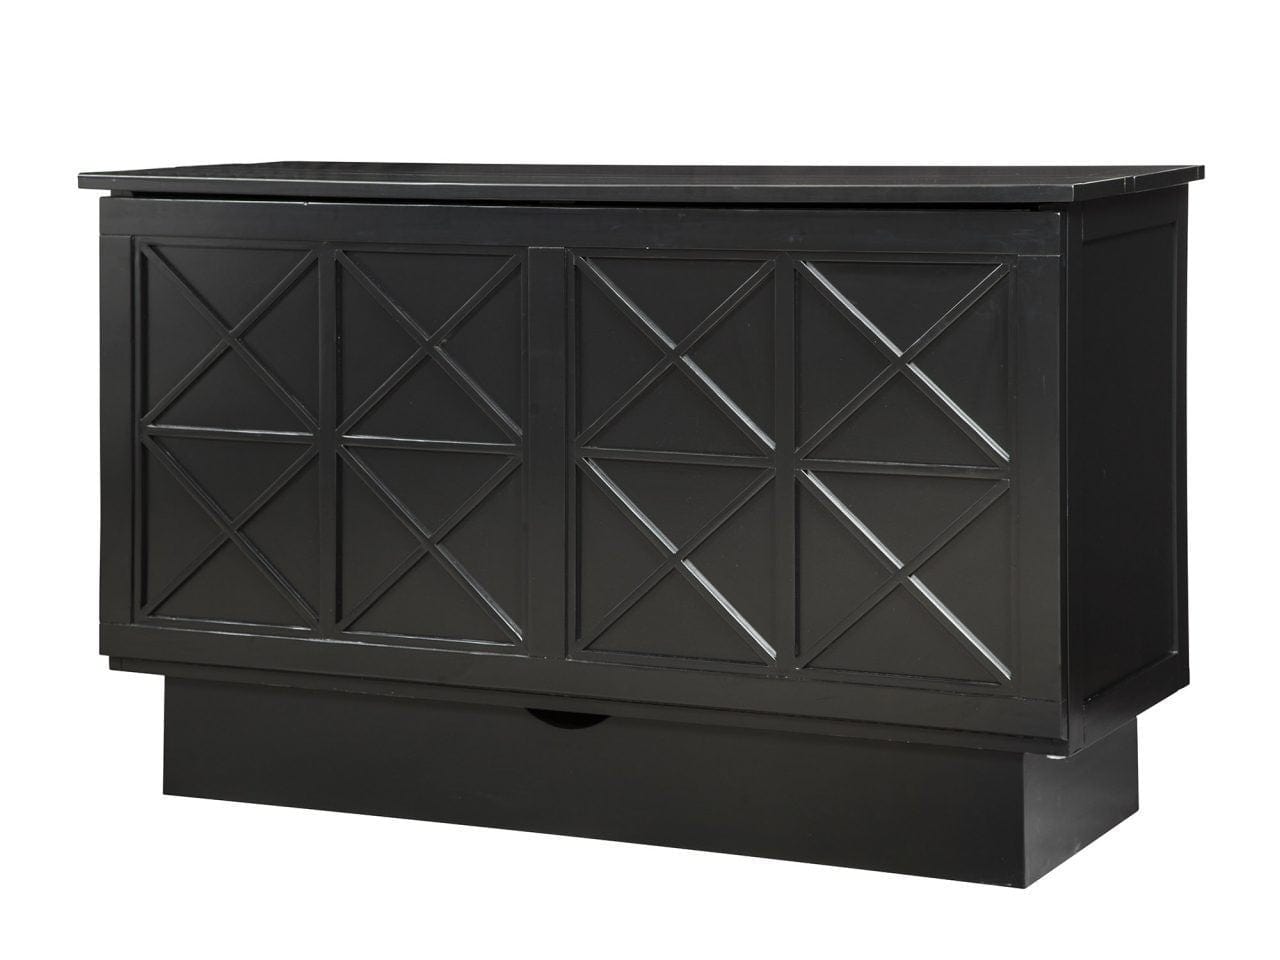 Arason Essex Style Black Cabinet Murphy Bed - Queen